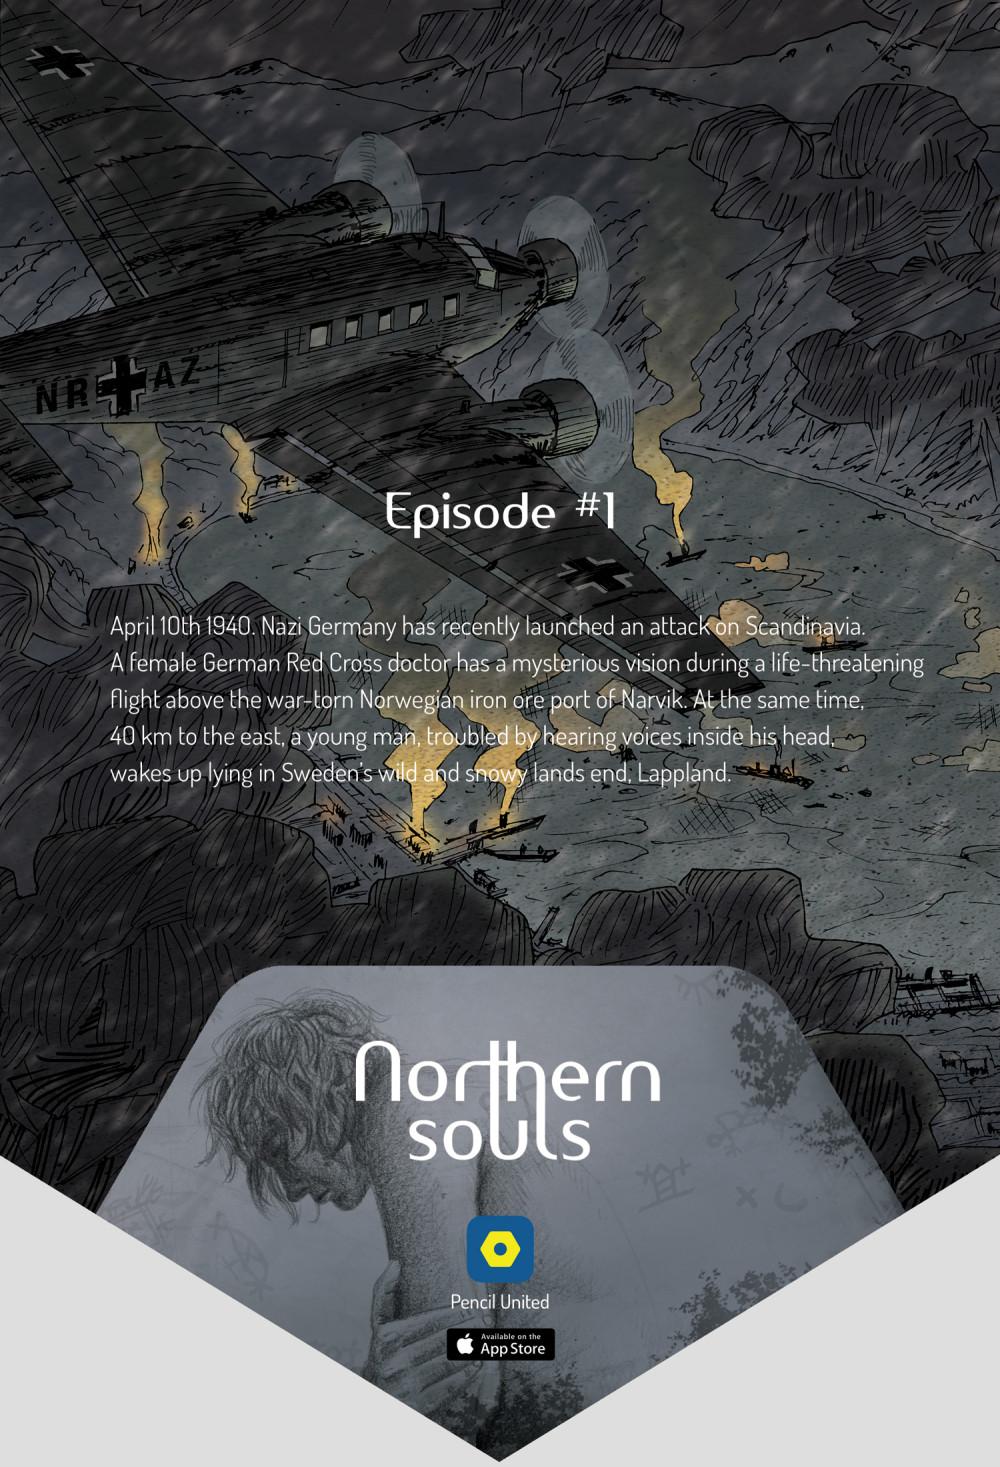 Pencil Unlimited - Northern Souls Episode 1 Sample